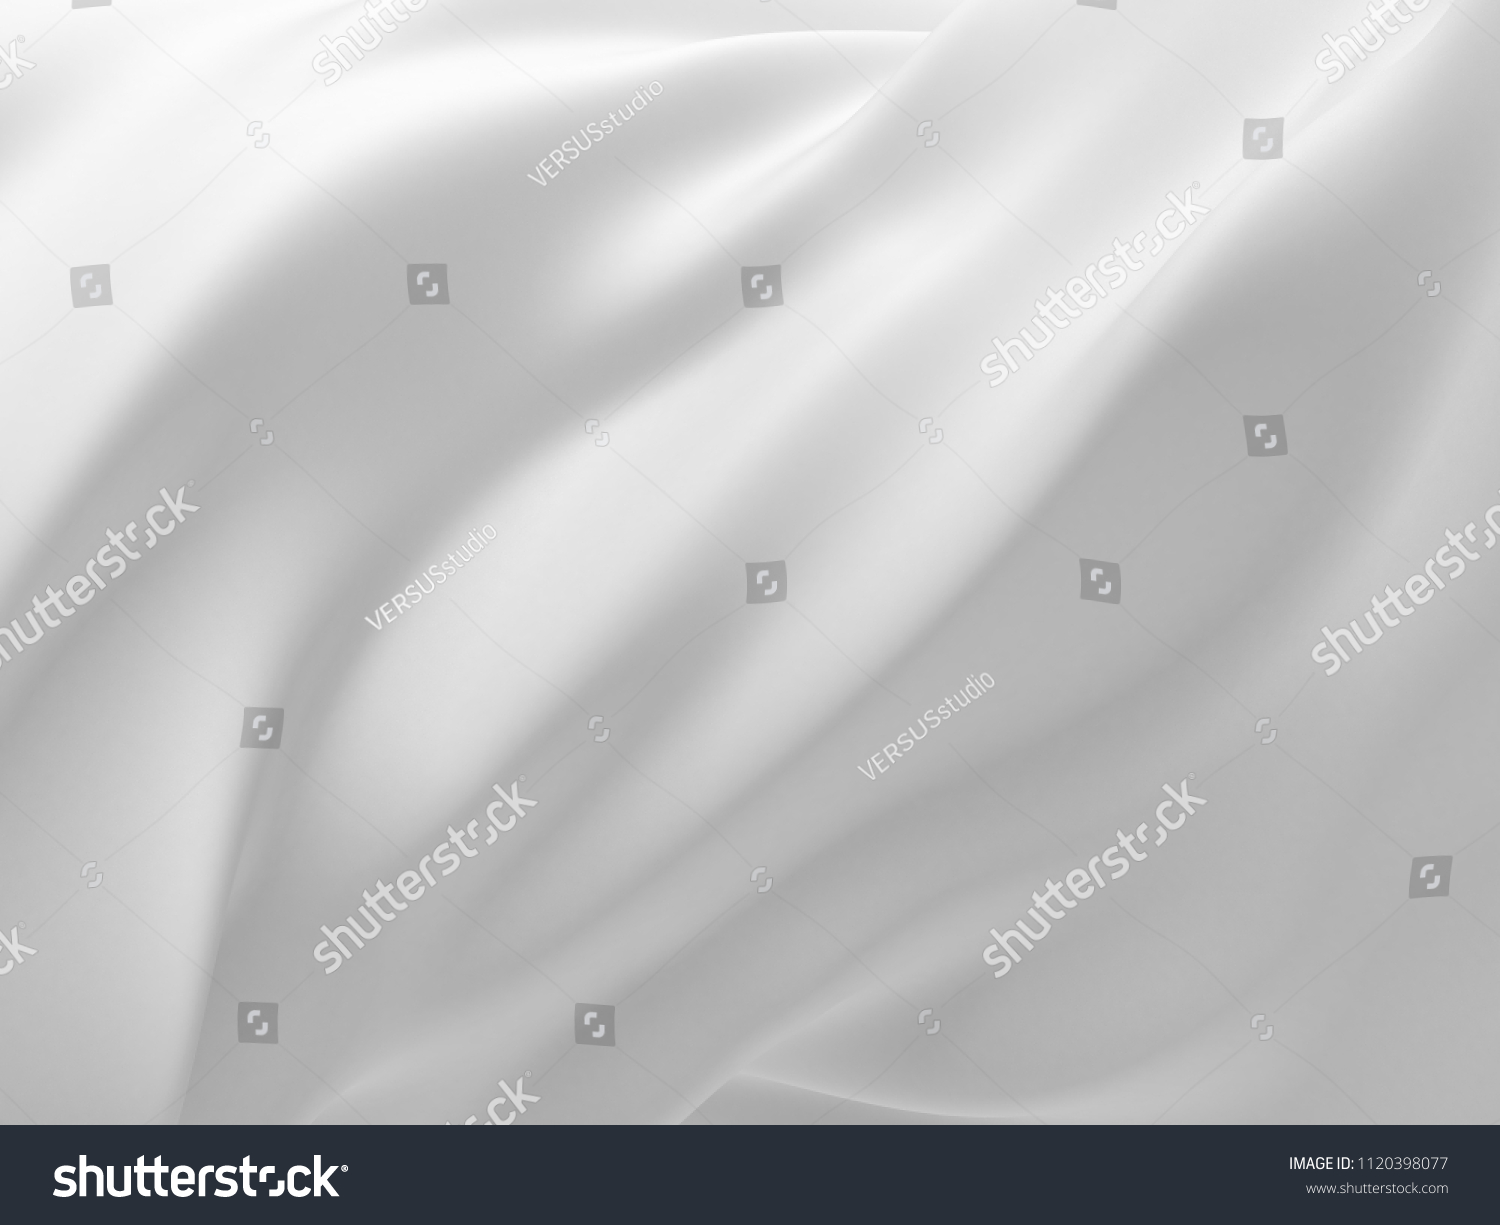 White stripe waves pattern futuristic background. 3d render illustration #1120398077